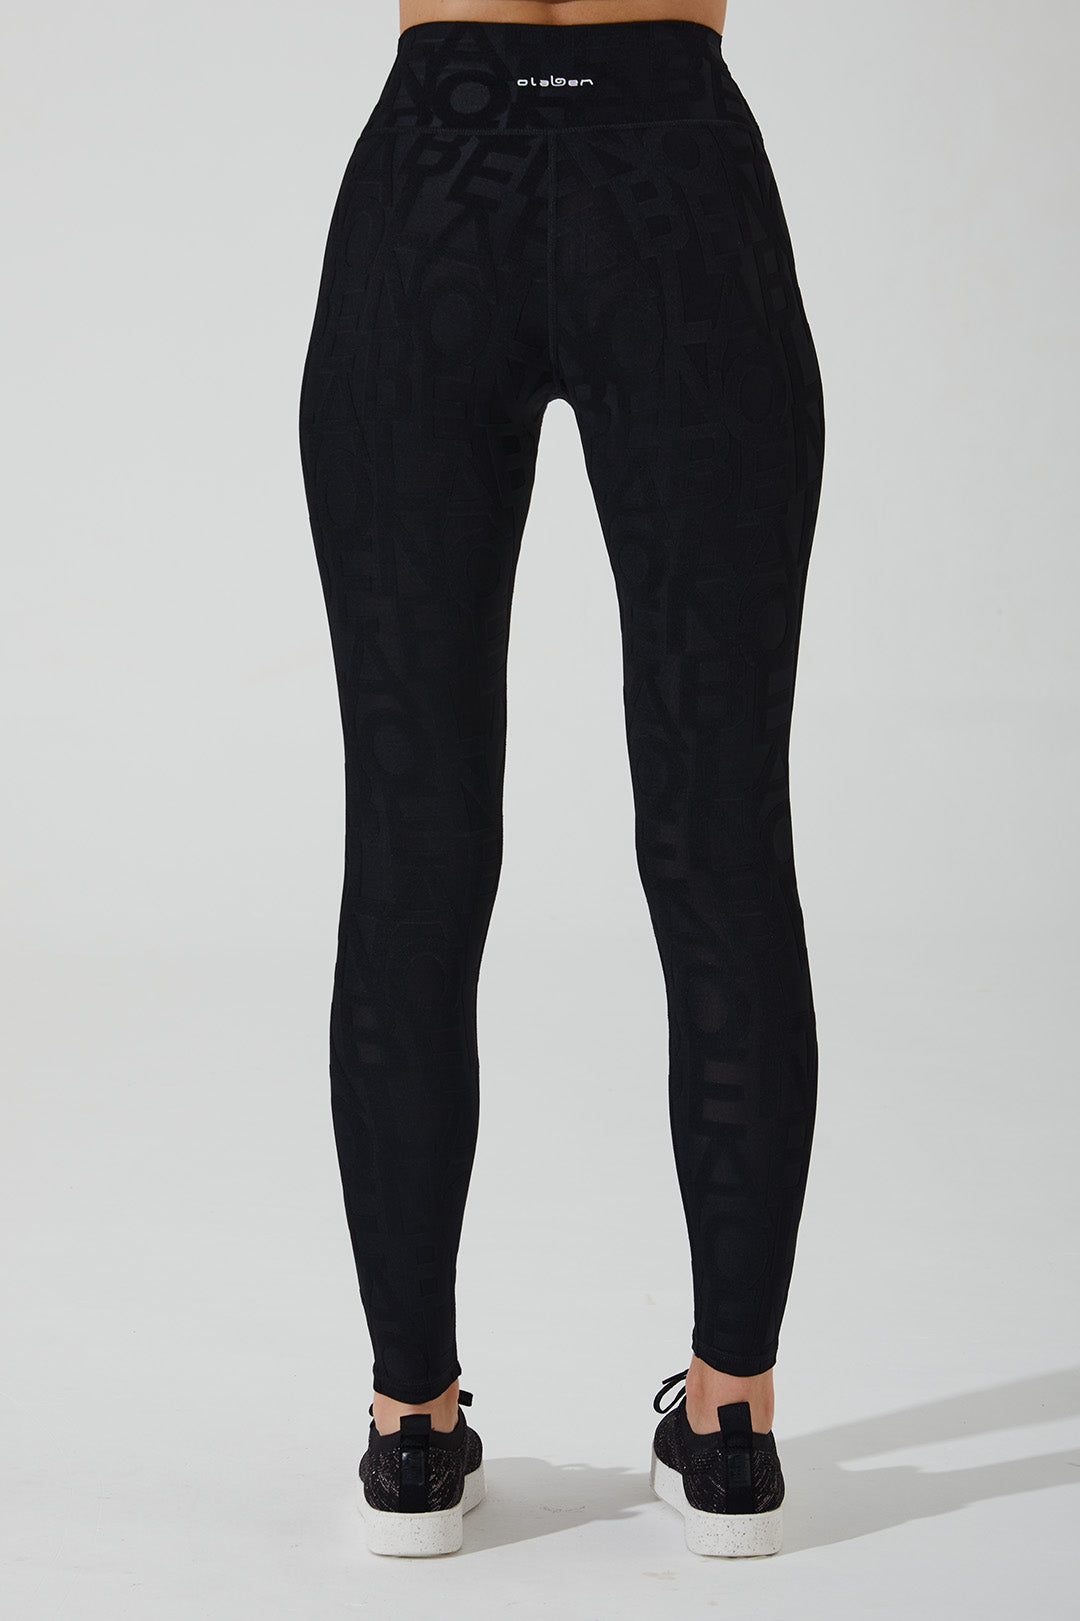 Carbon black 3D women's leggings with floral design, size 4, product code OW-0073-WLG-BK.